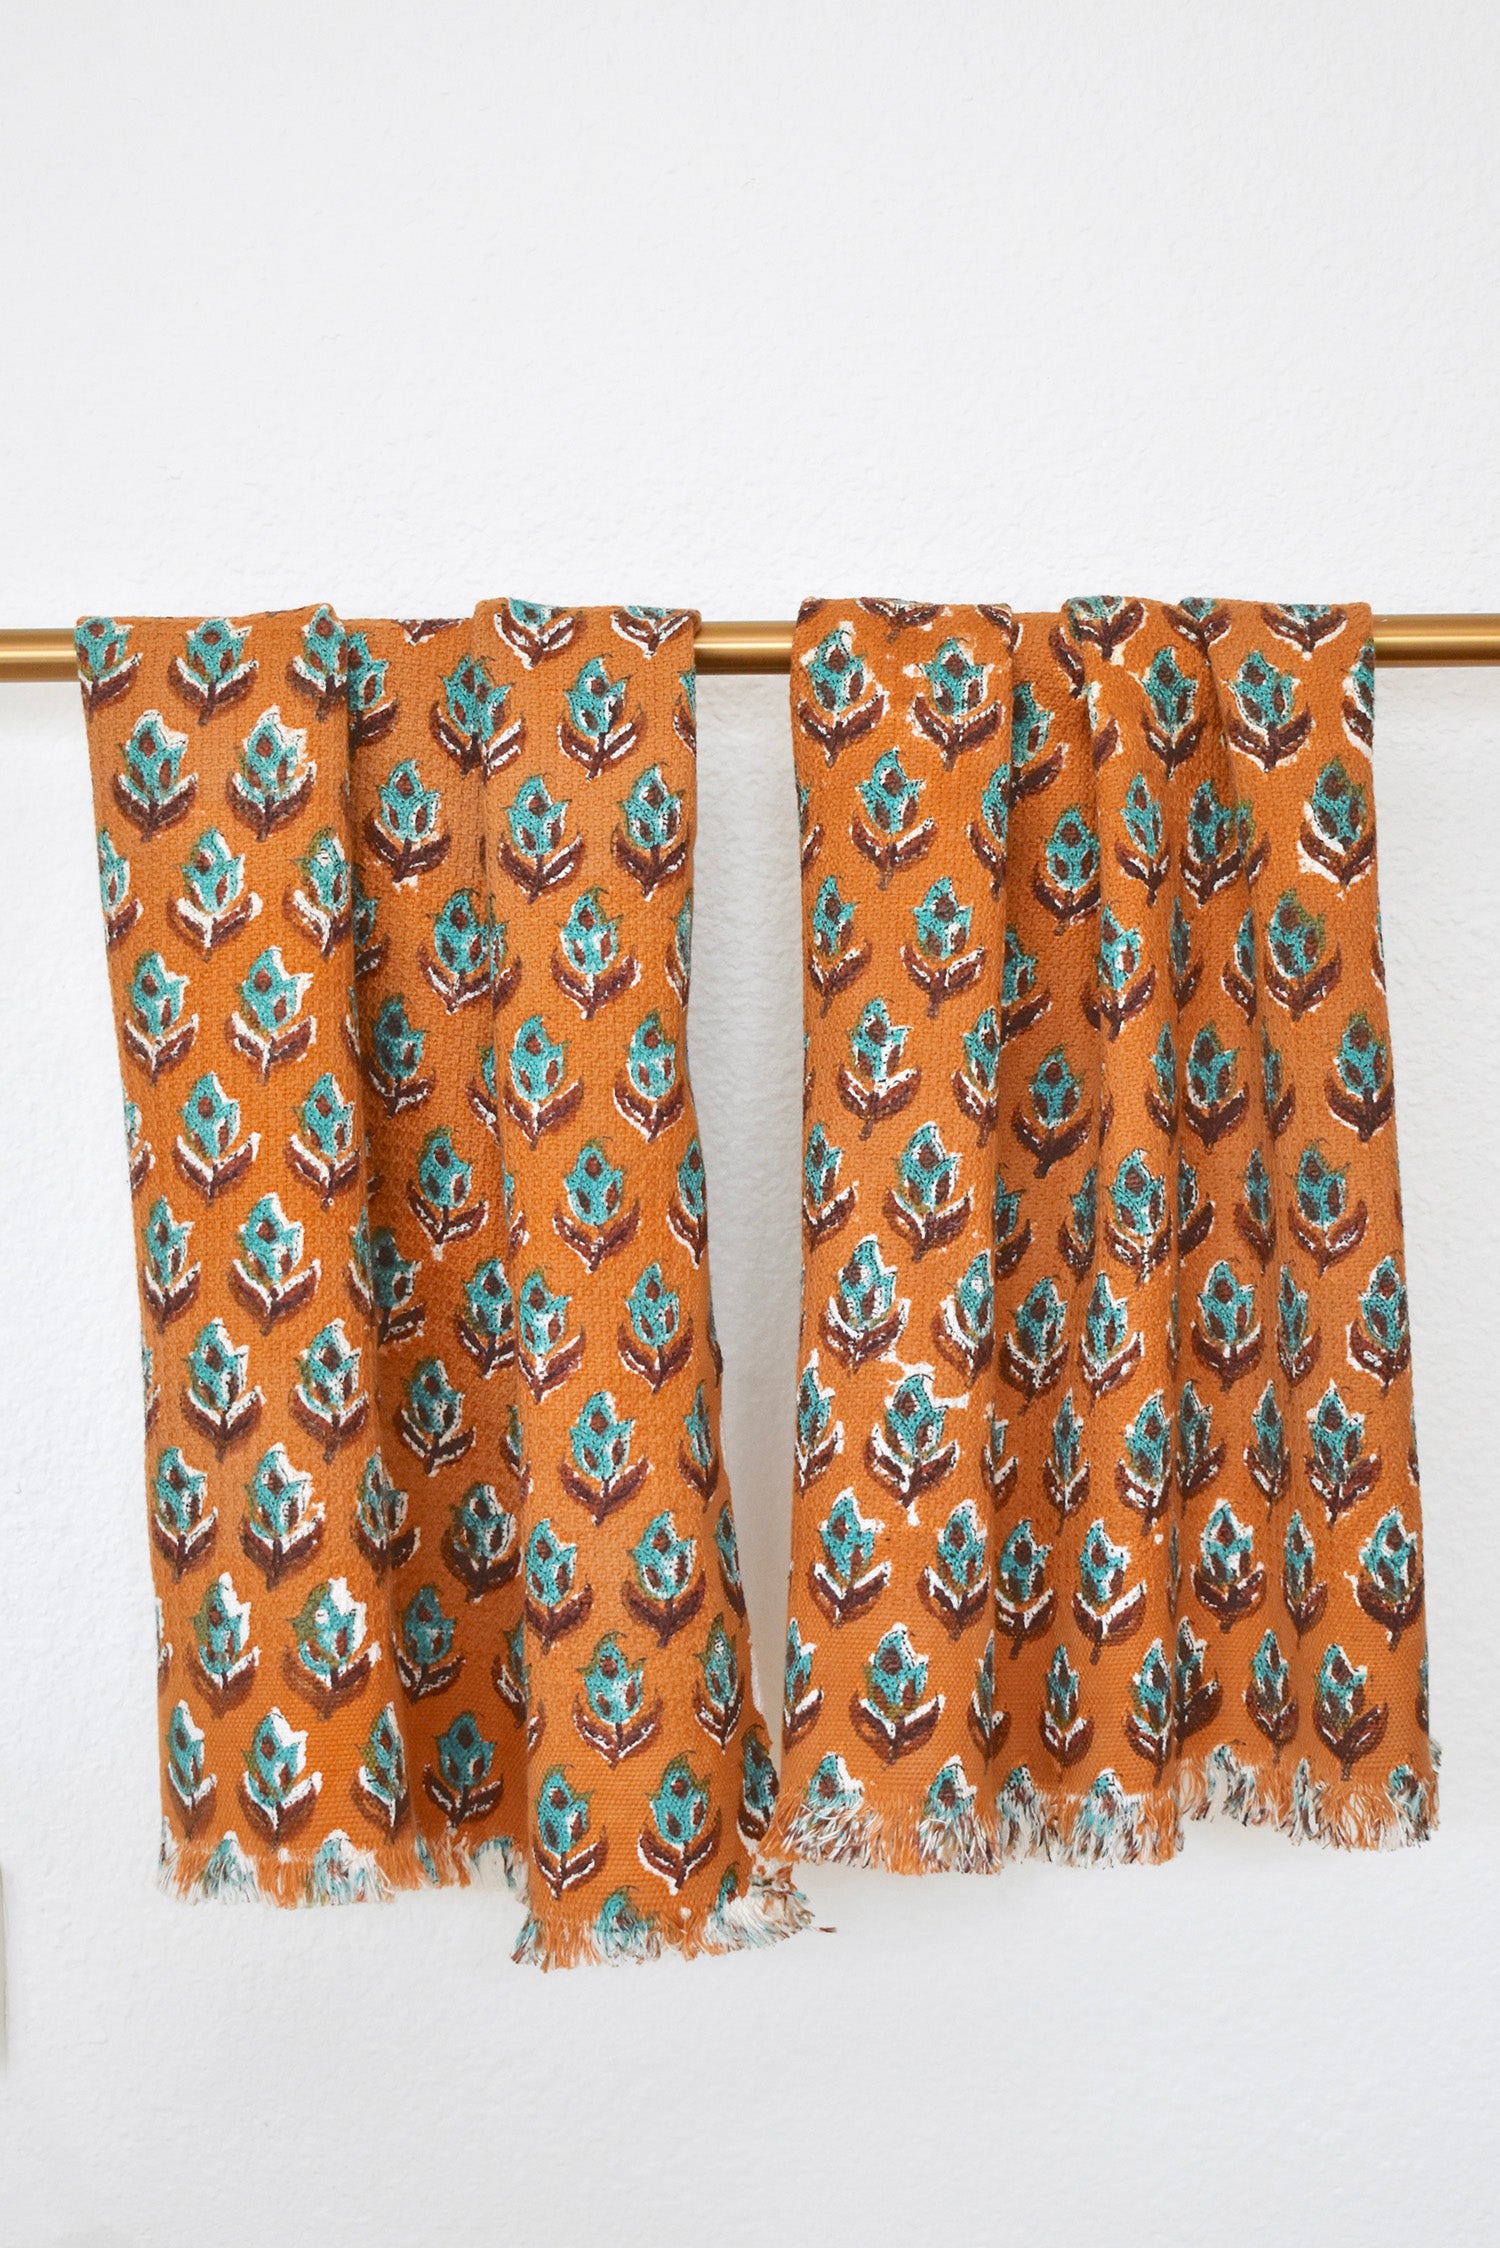 Two Dakota block printed khadi cotton hand towels hanging on a gold bathroom rod